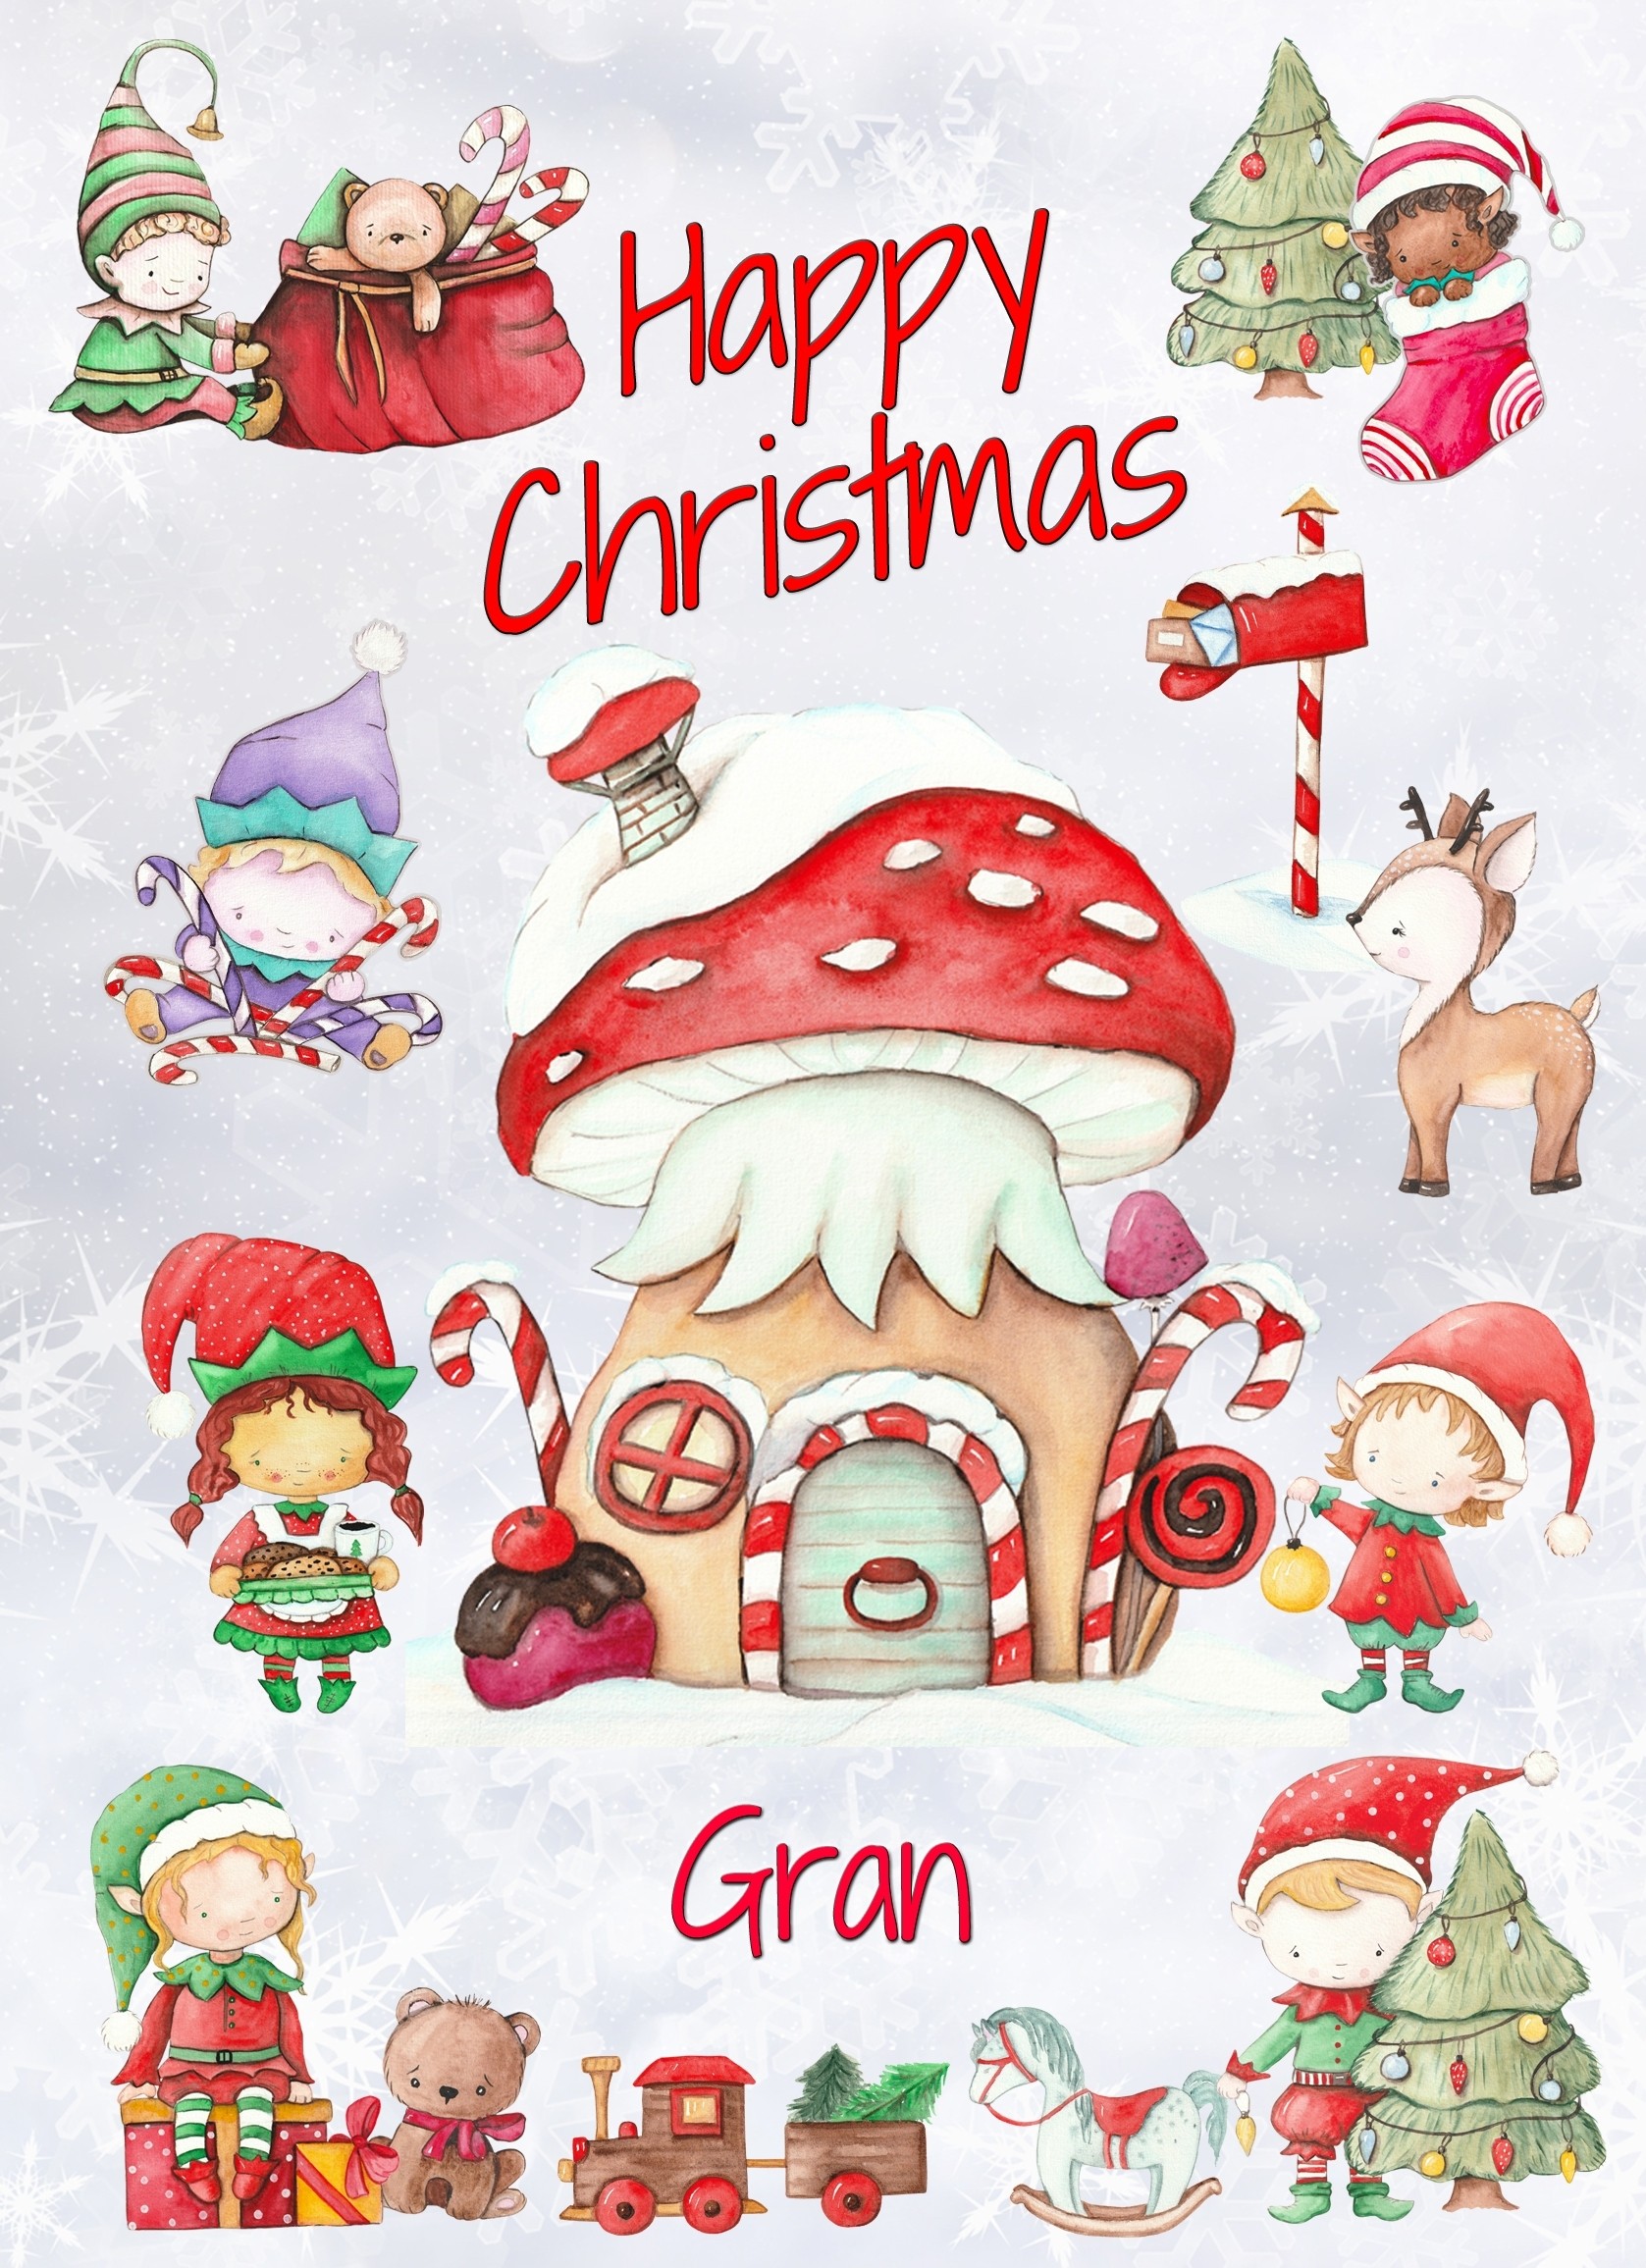 Christmas Card For Gran (Elf, White)